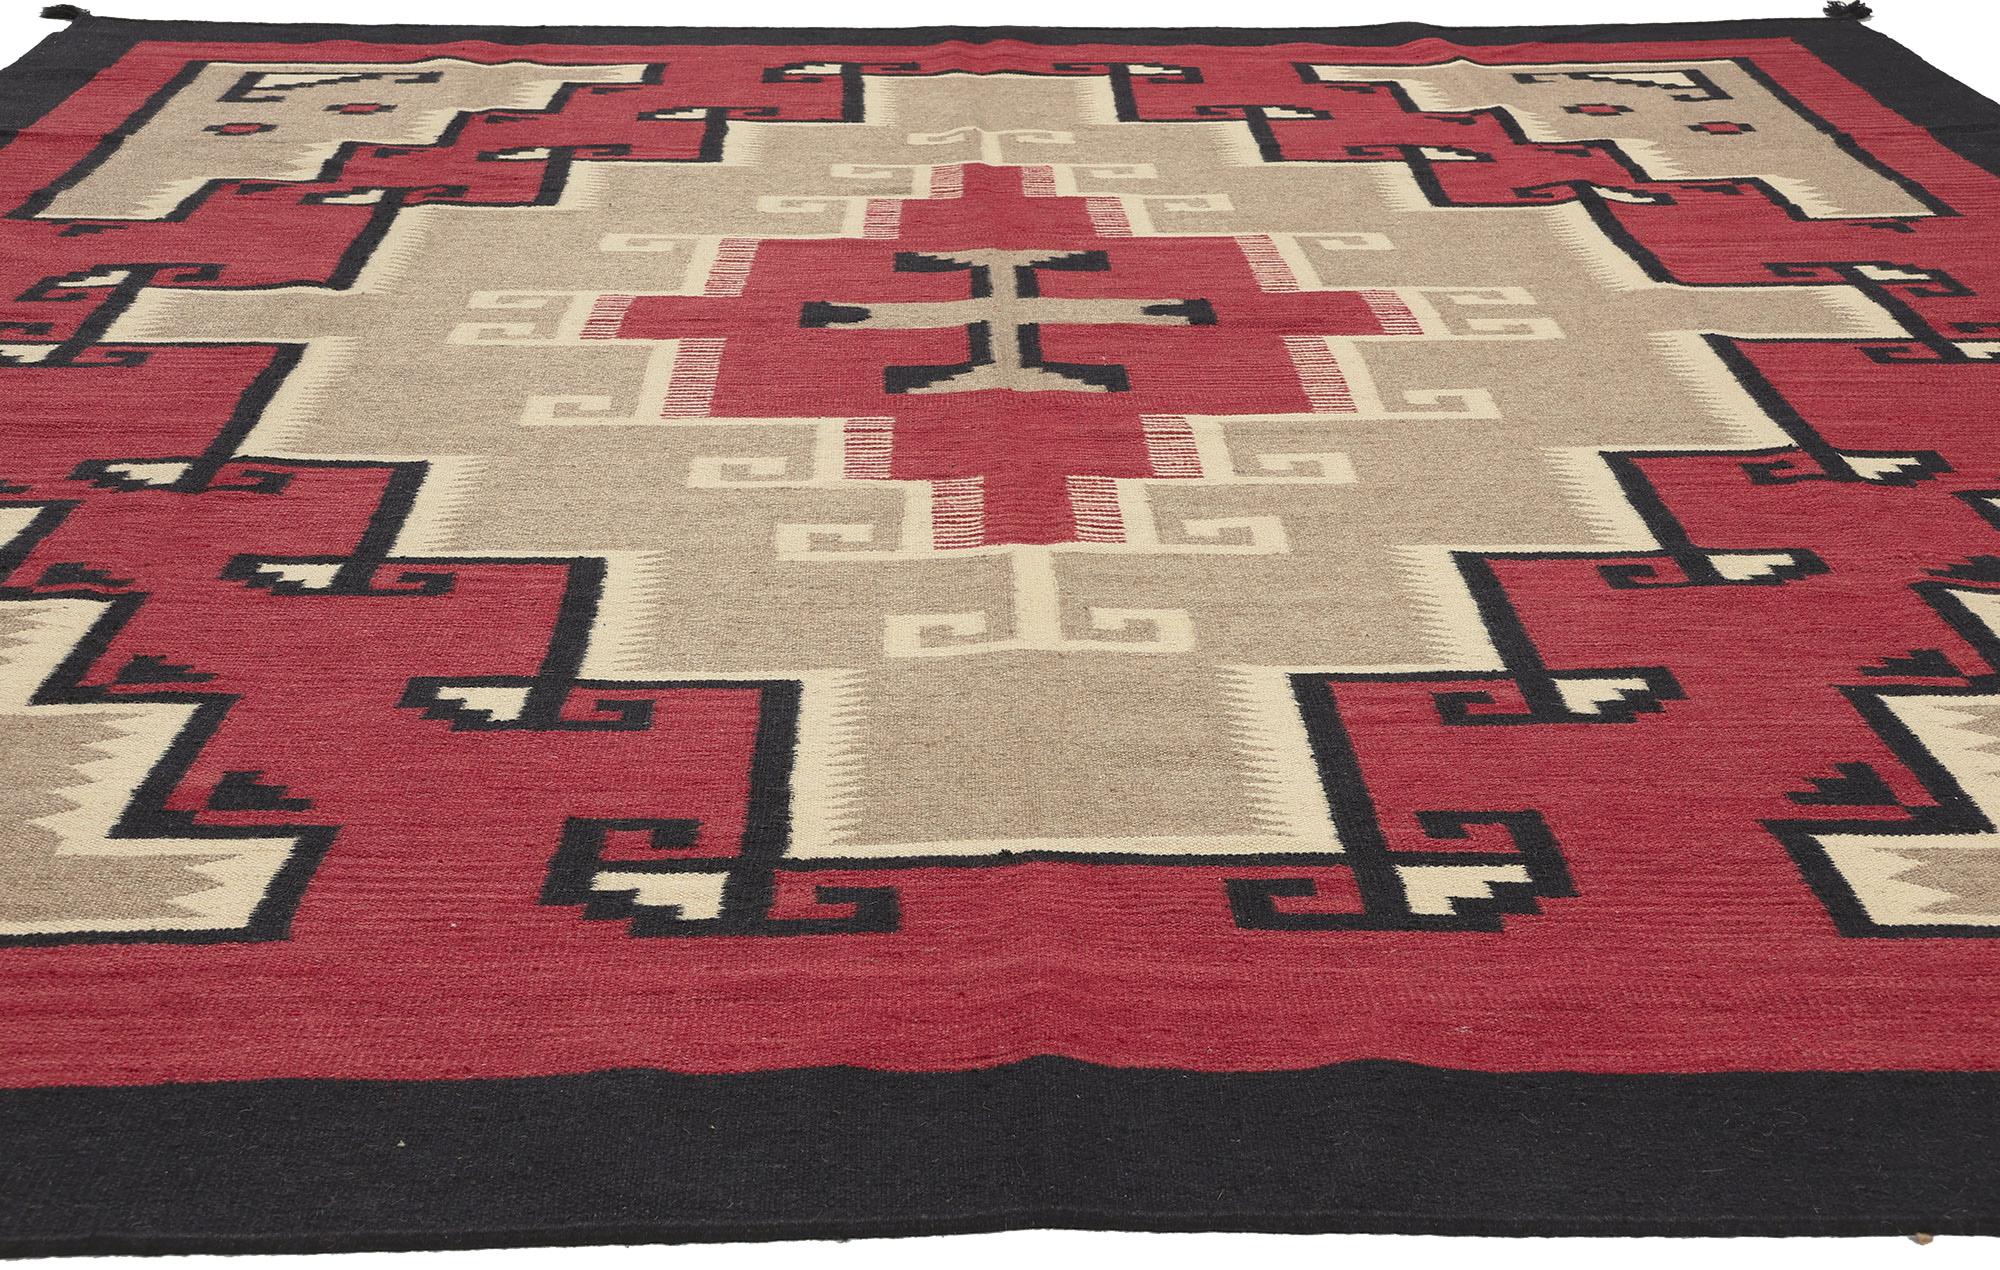 South Asian Contemporary Santa Fe Southwest Modern Red Ganado Navajo-Style Rug For Sale